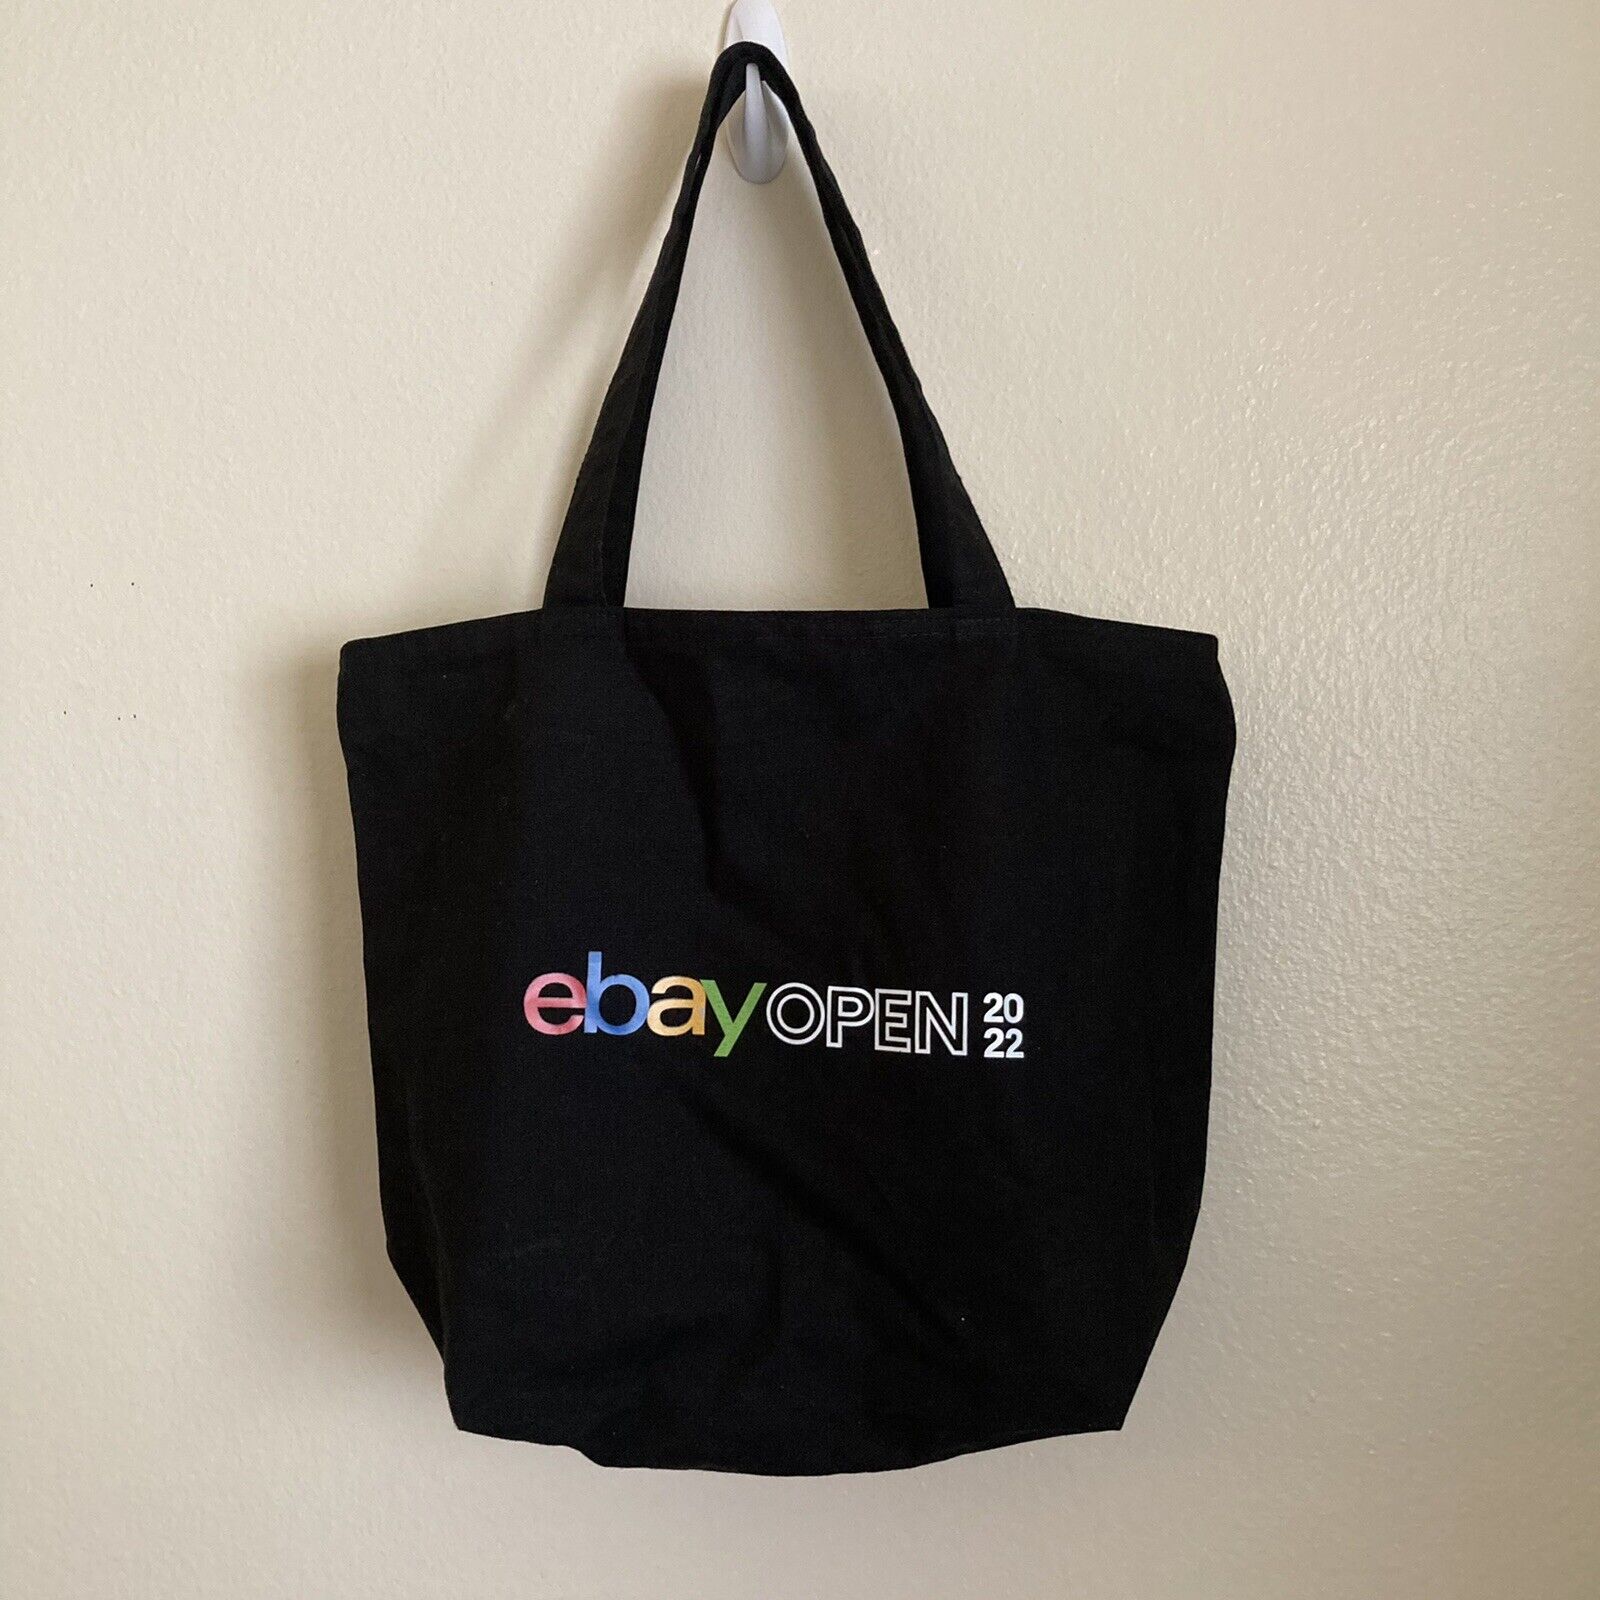 Ebay Open 2022 Convention Reusable Tote Swag Bag Canvas Zip Top Black